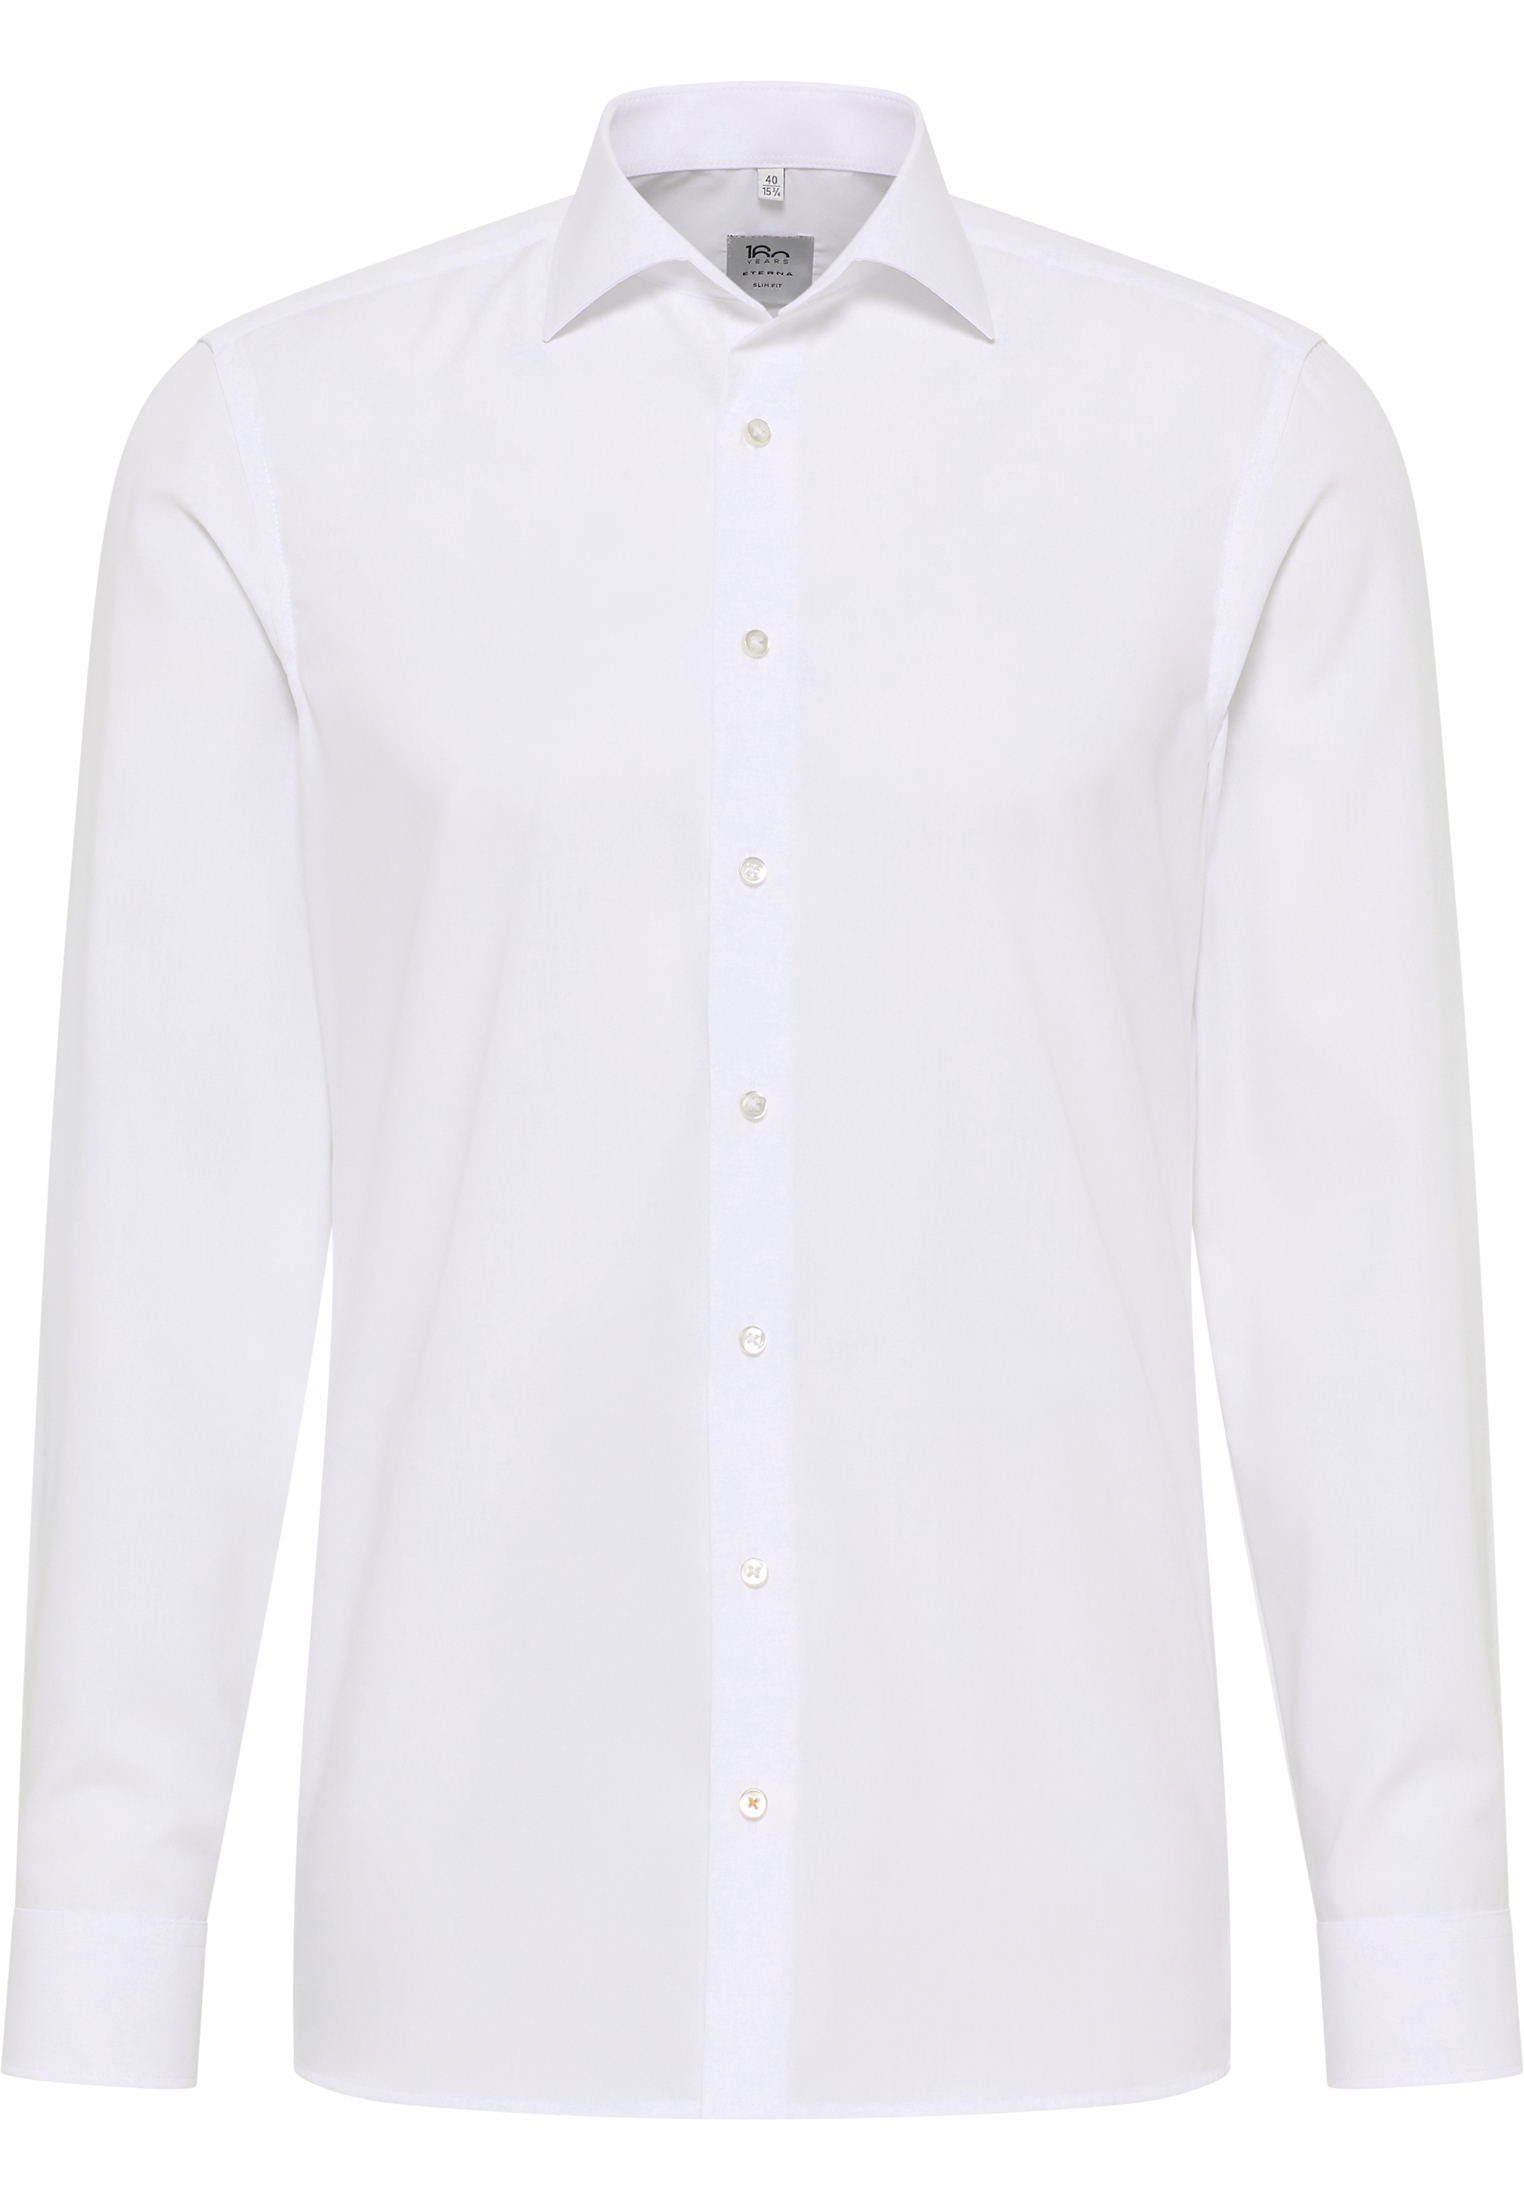 SLIM FIT Original Shirt in weiß unifarben